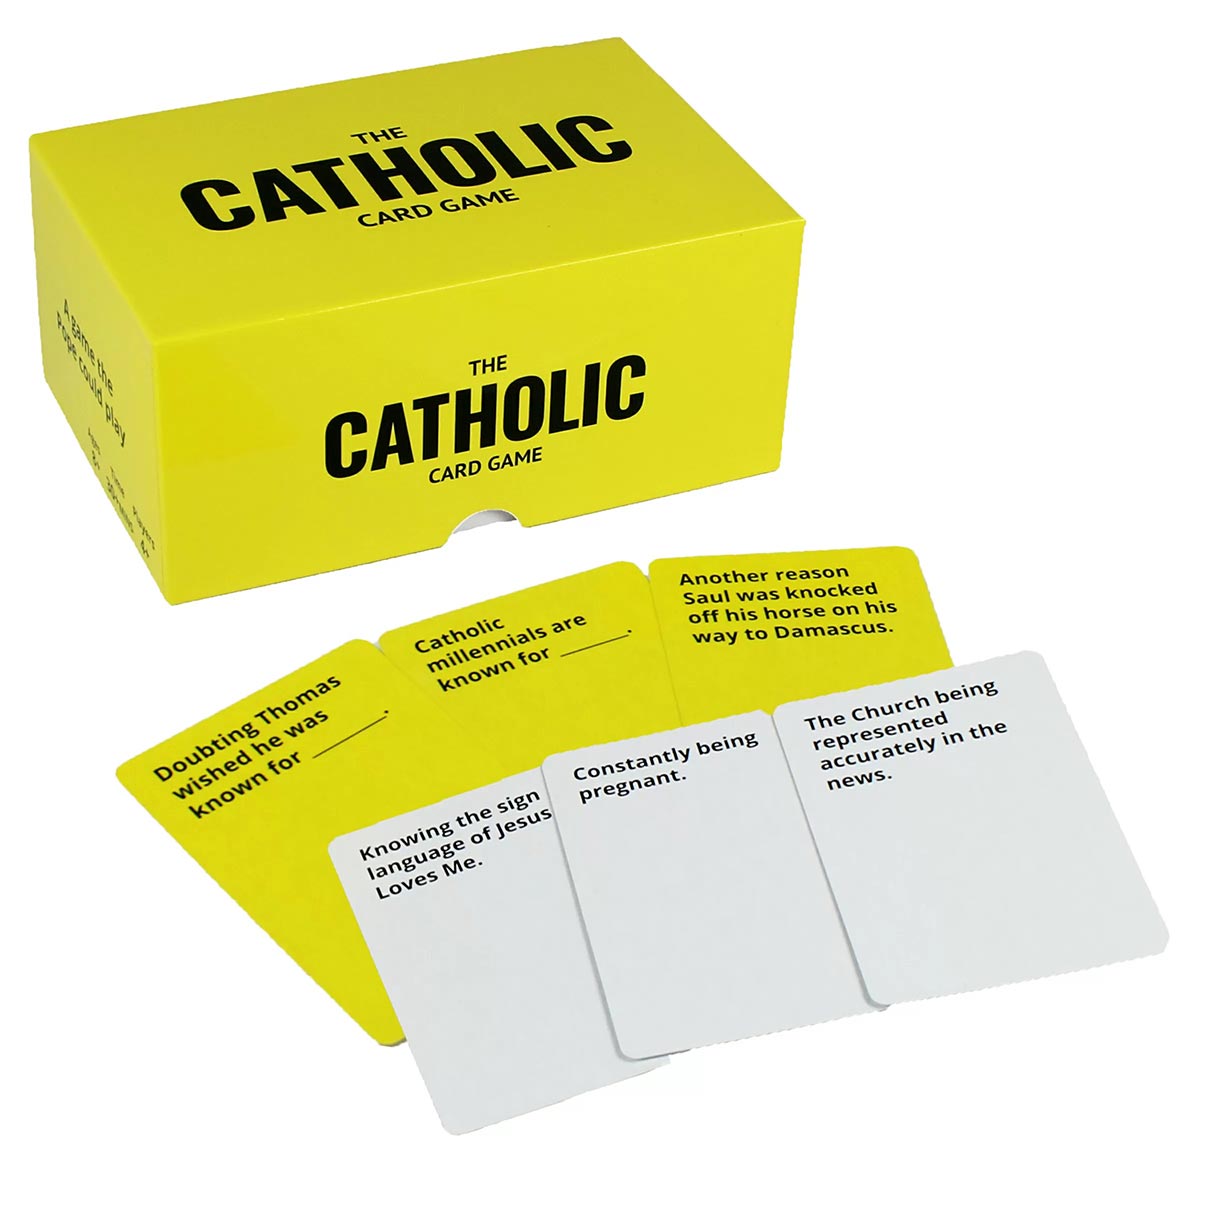 Matt Martinusen, The Catholic Card Game